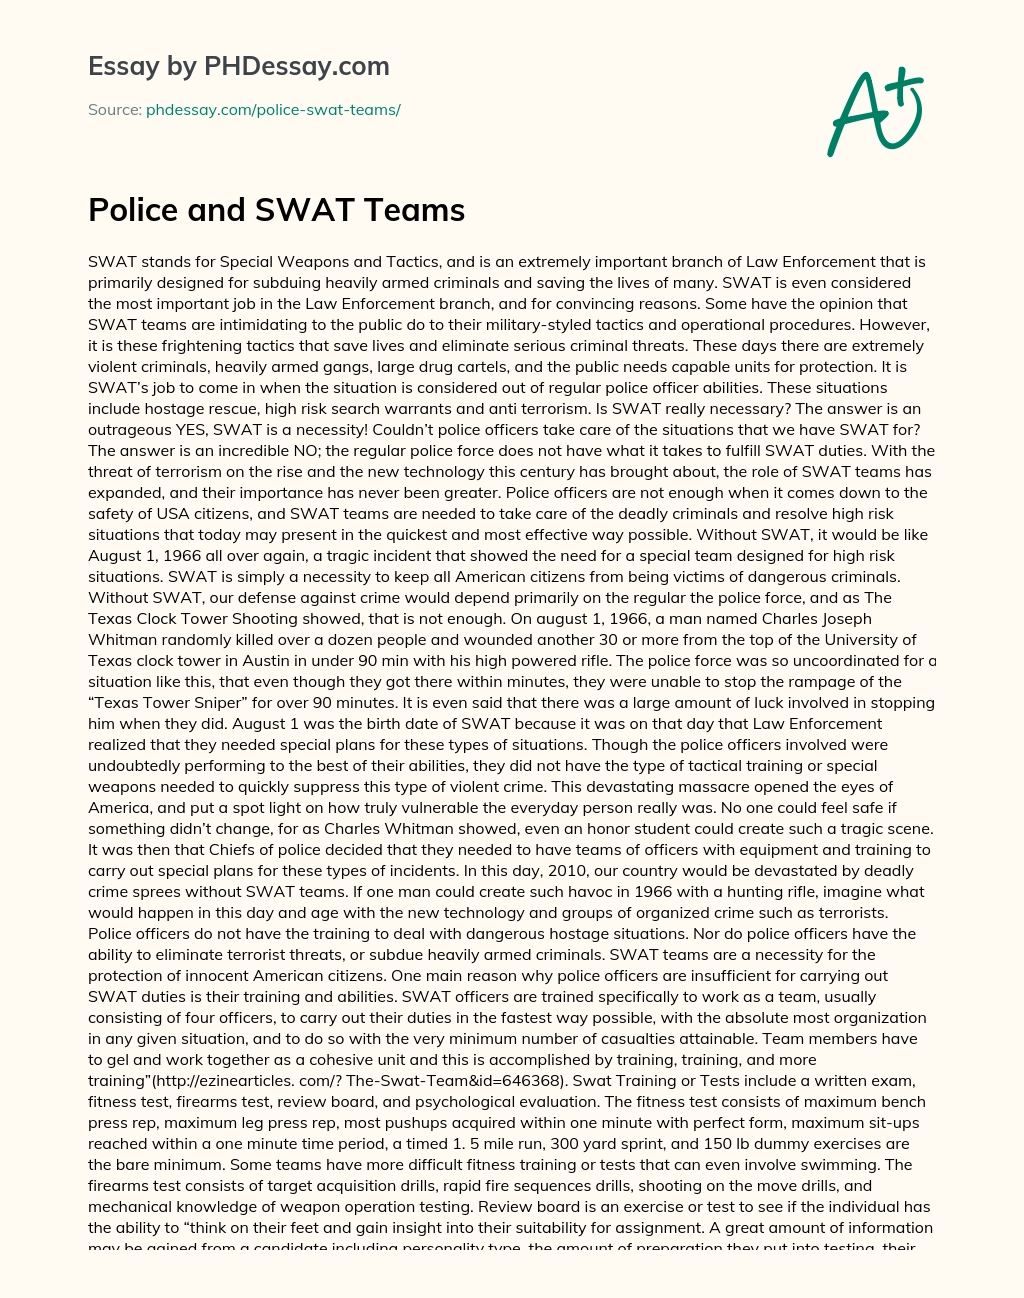 Police and SWAT Teams essay